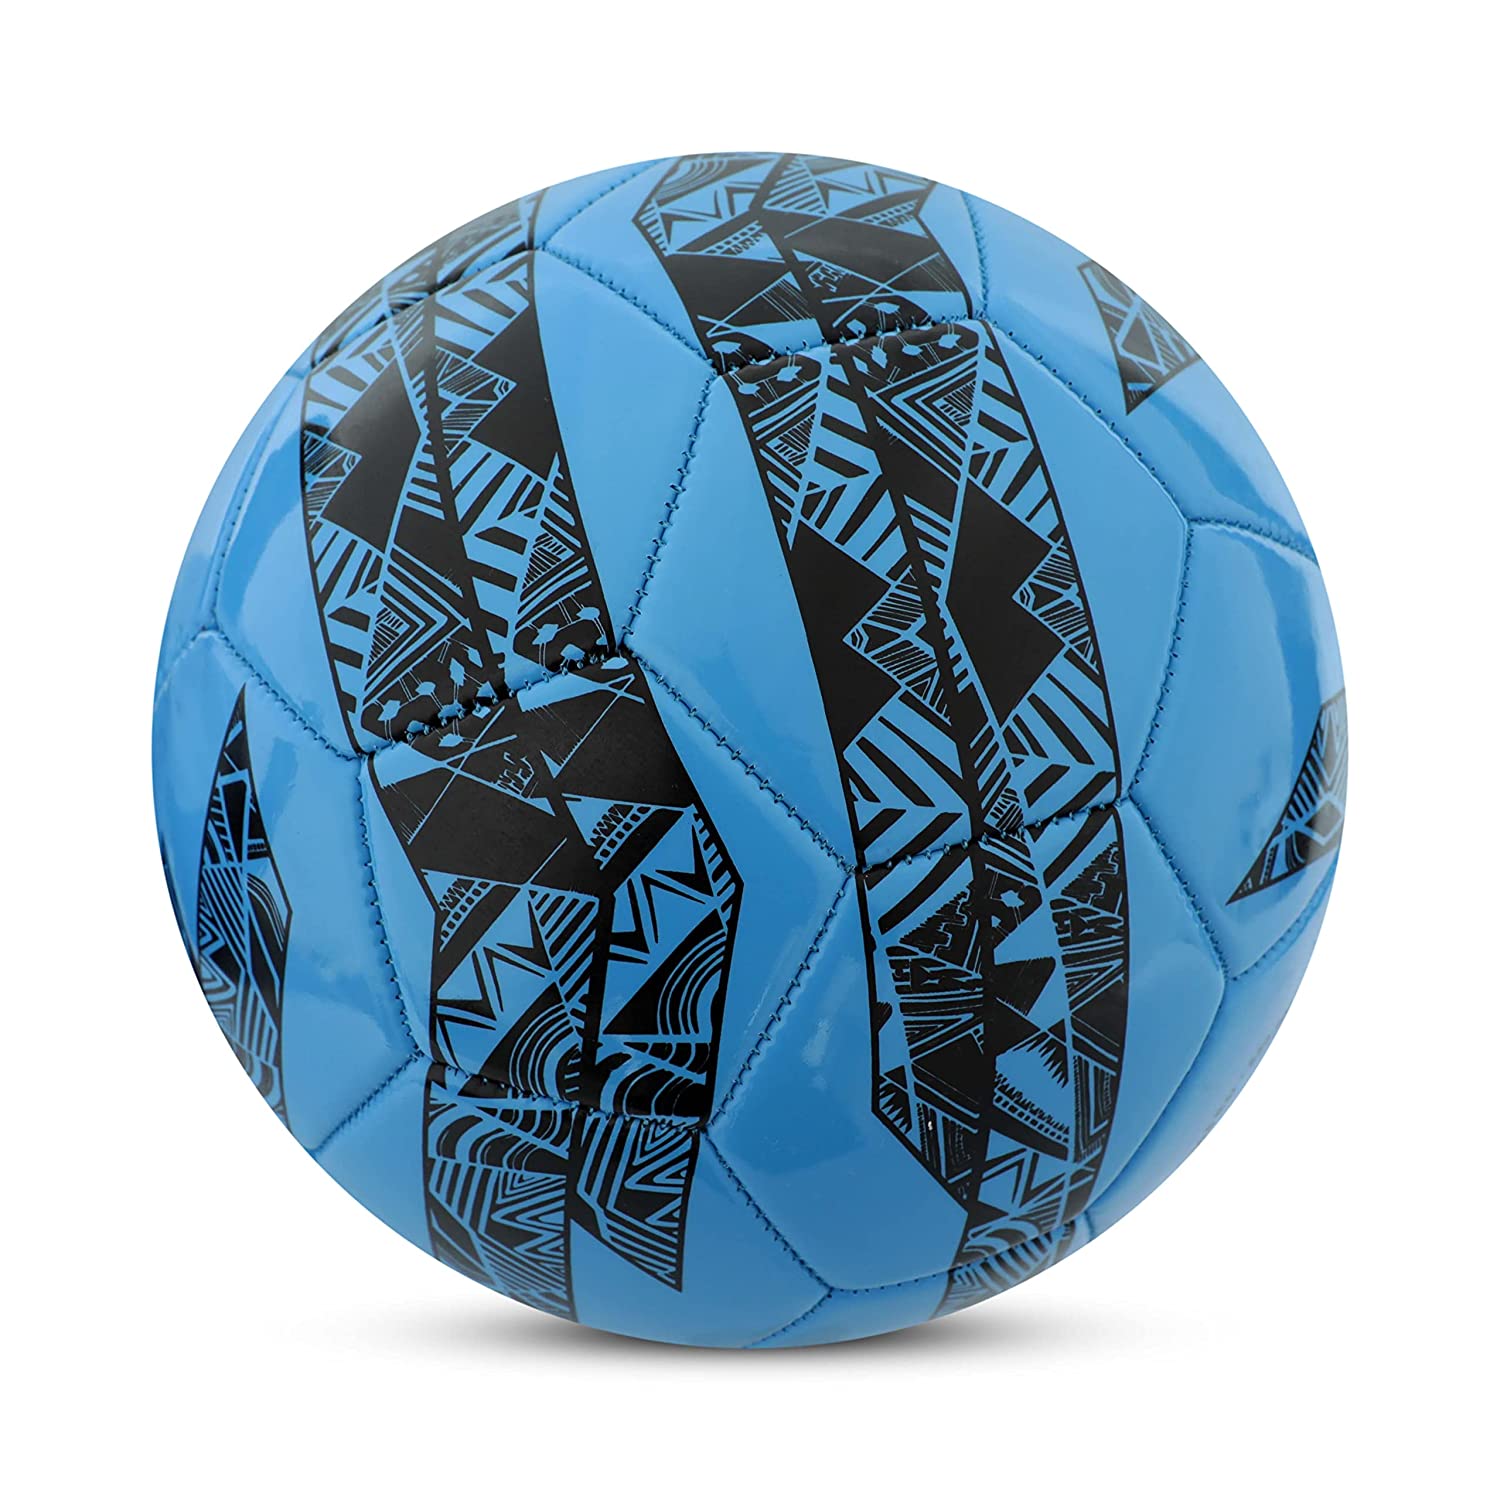 Nivia World Fest Argentina Football, Blue - Best Price online Prokicksports.com